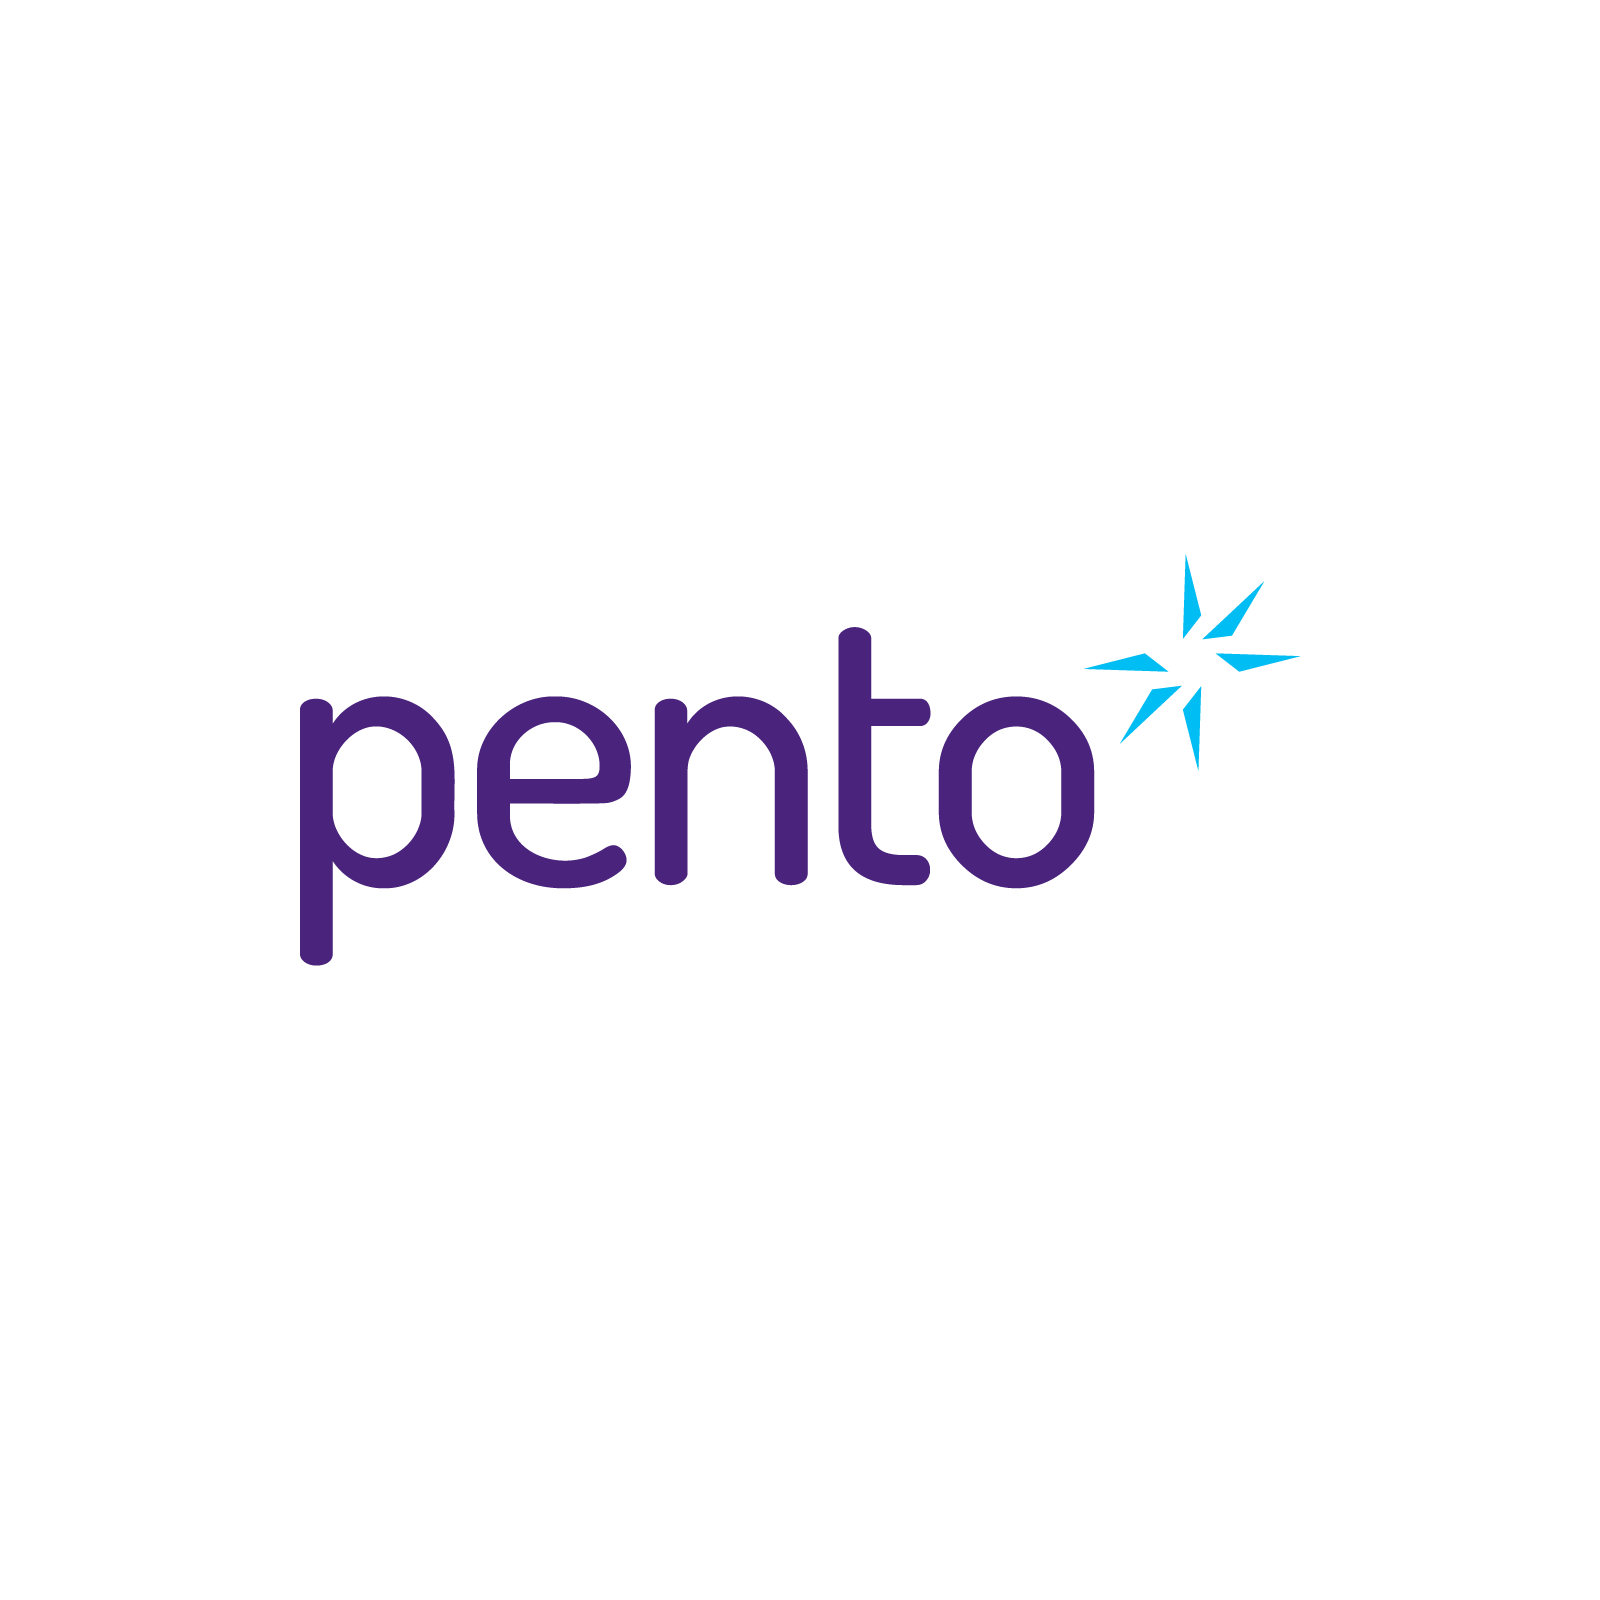 Pento Brand Development - Colour Logo by Peek Creative Limited